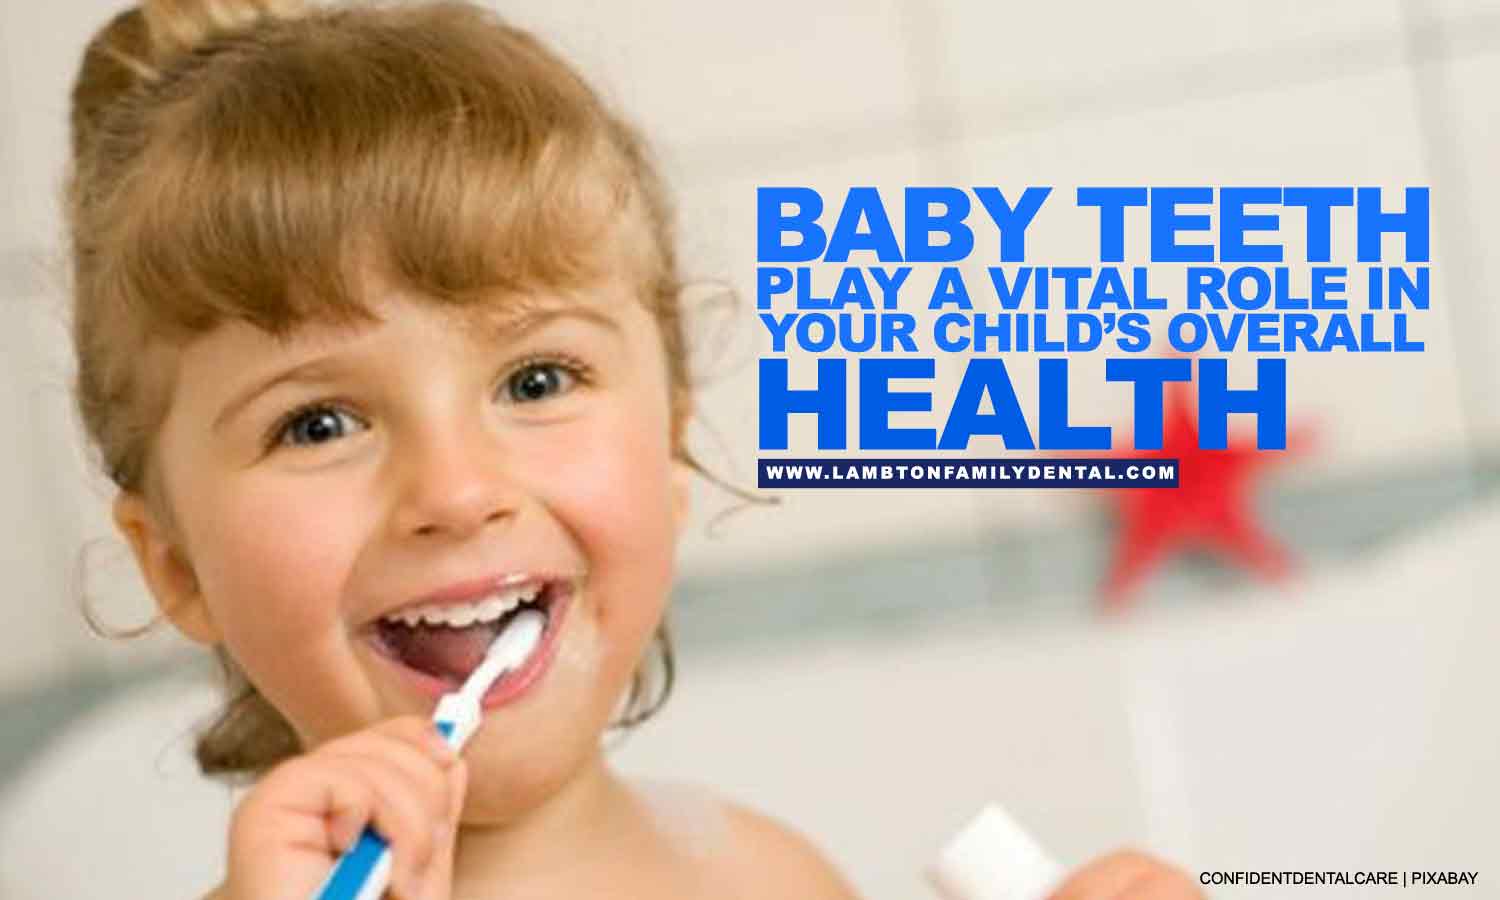 Baby teeth play a vital role